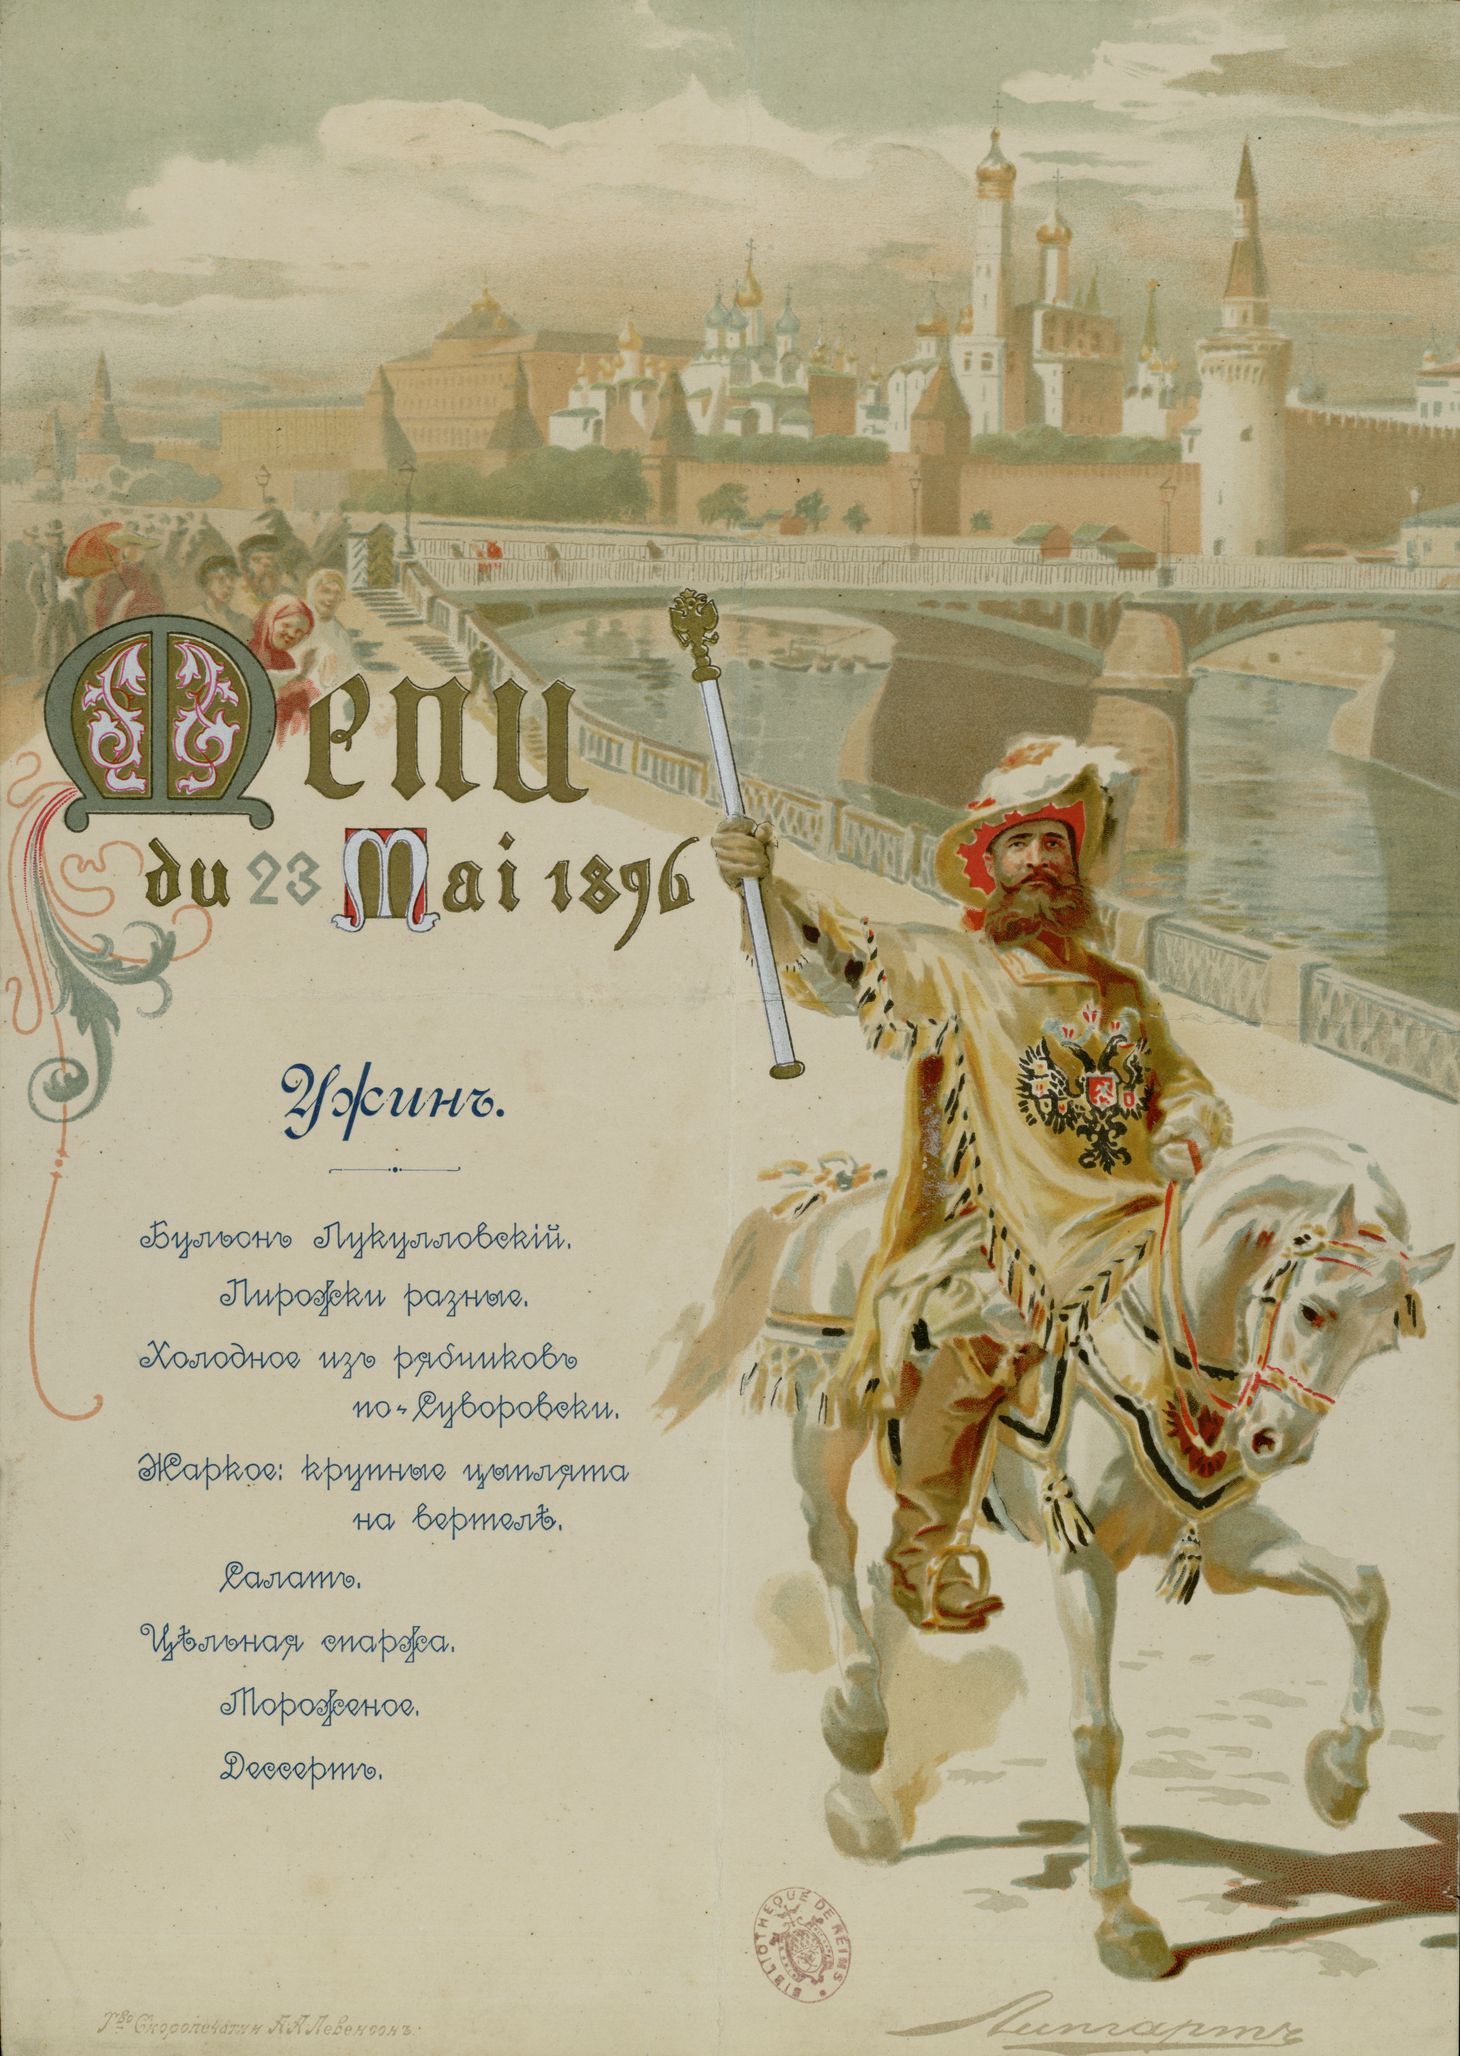 Banquet organisé lors du Sacre de Nicolas II, le 23 mai 1896, Menu en russe. Don Baron de Baye. Portefeuille CCXLVIII-III-1-60